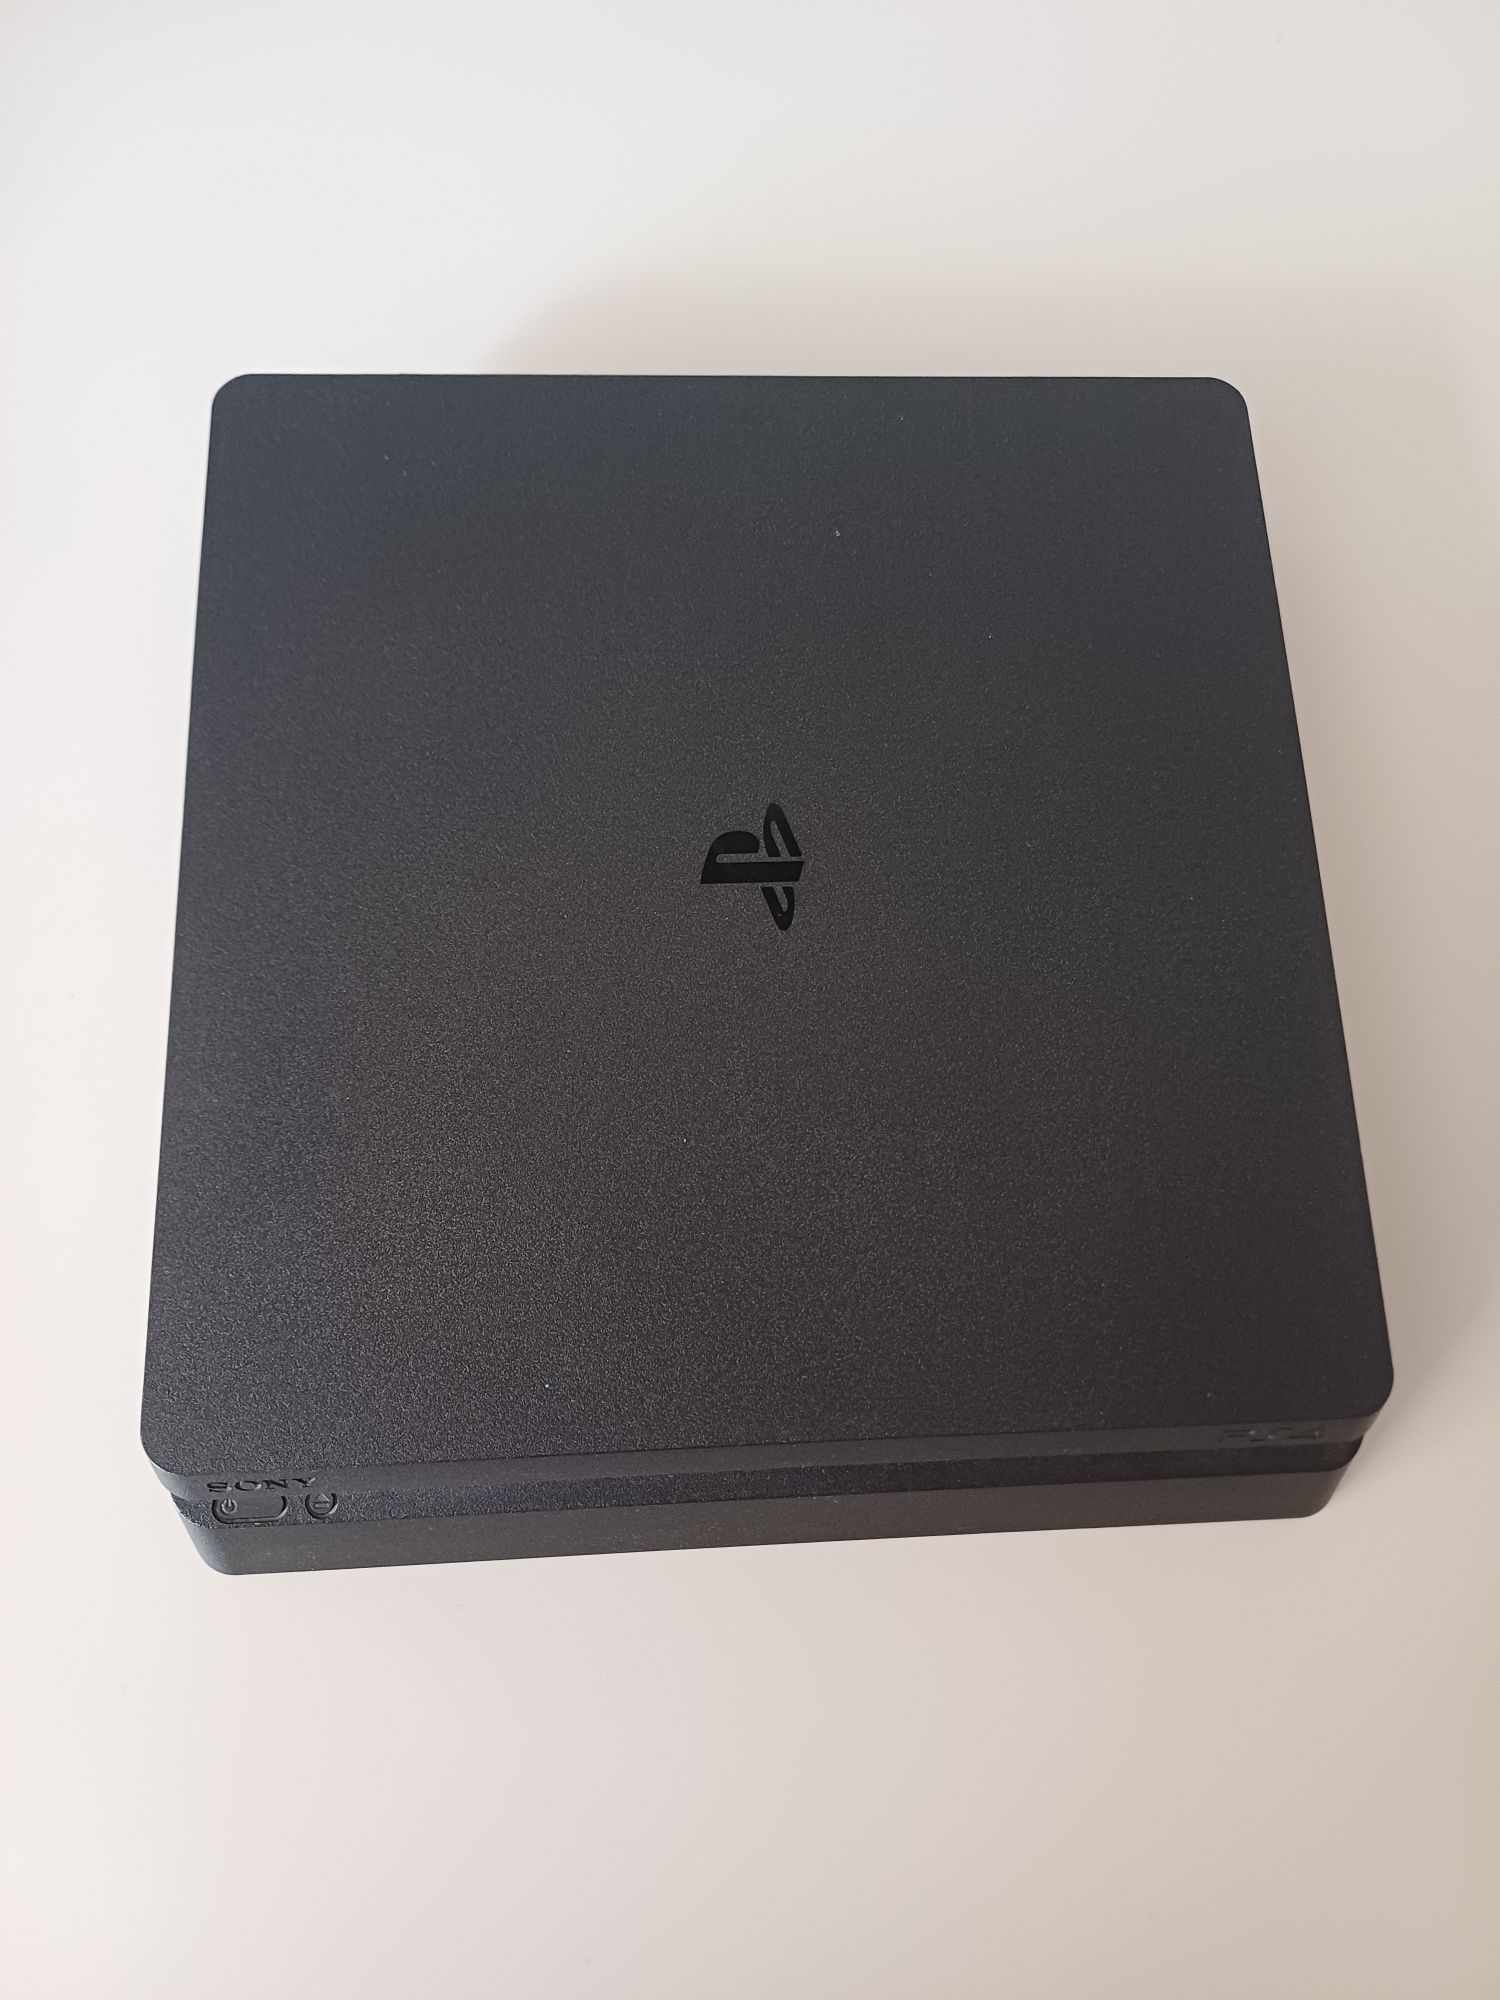 Sony Playstation 4 Slim (PS4), 500 GB + Два джойстика